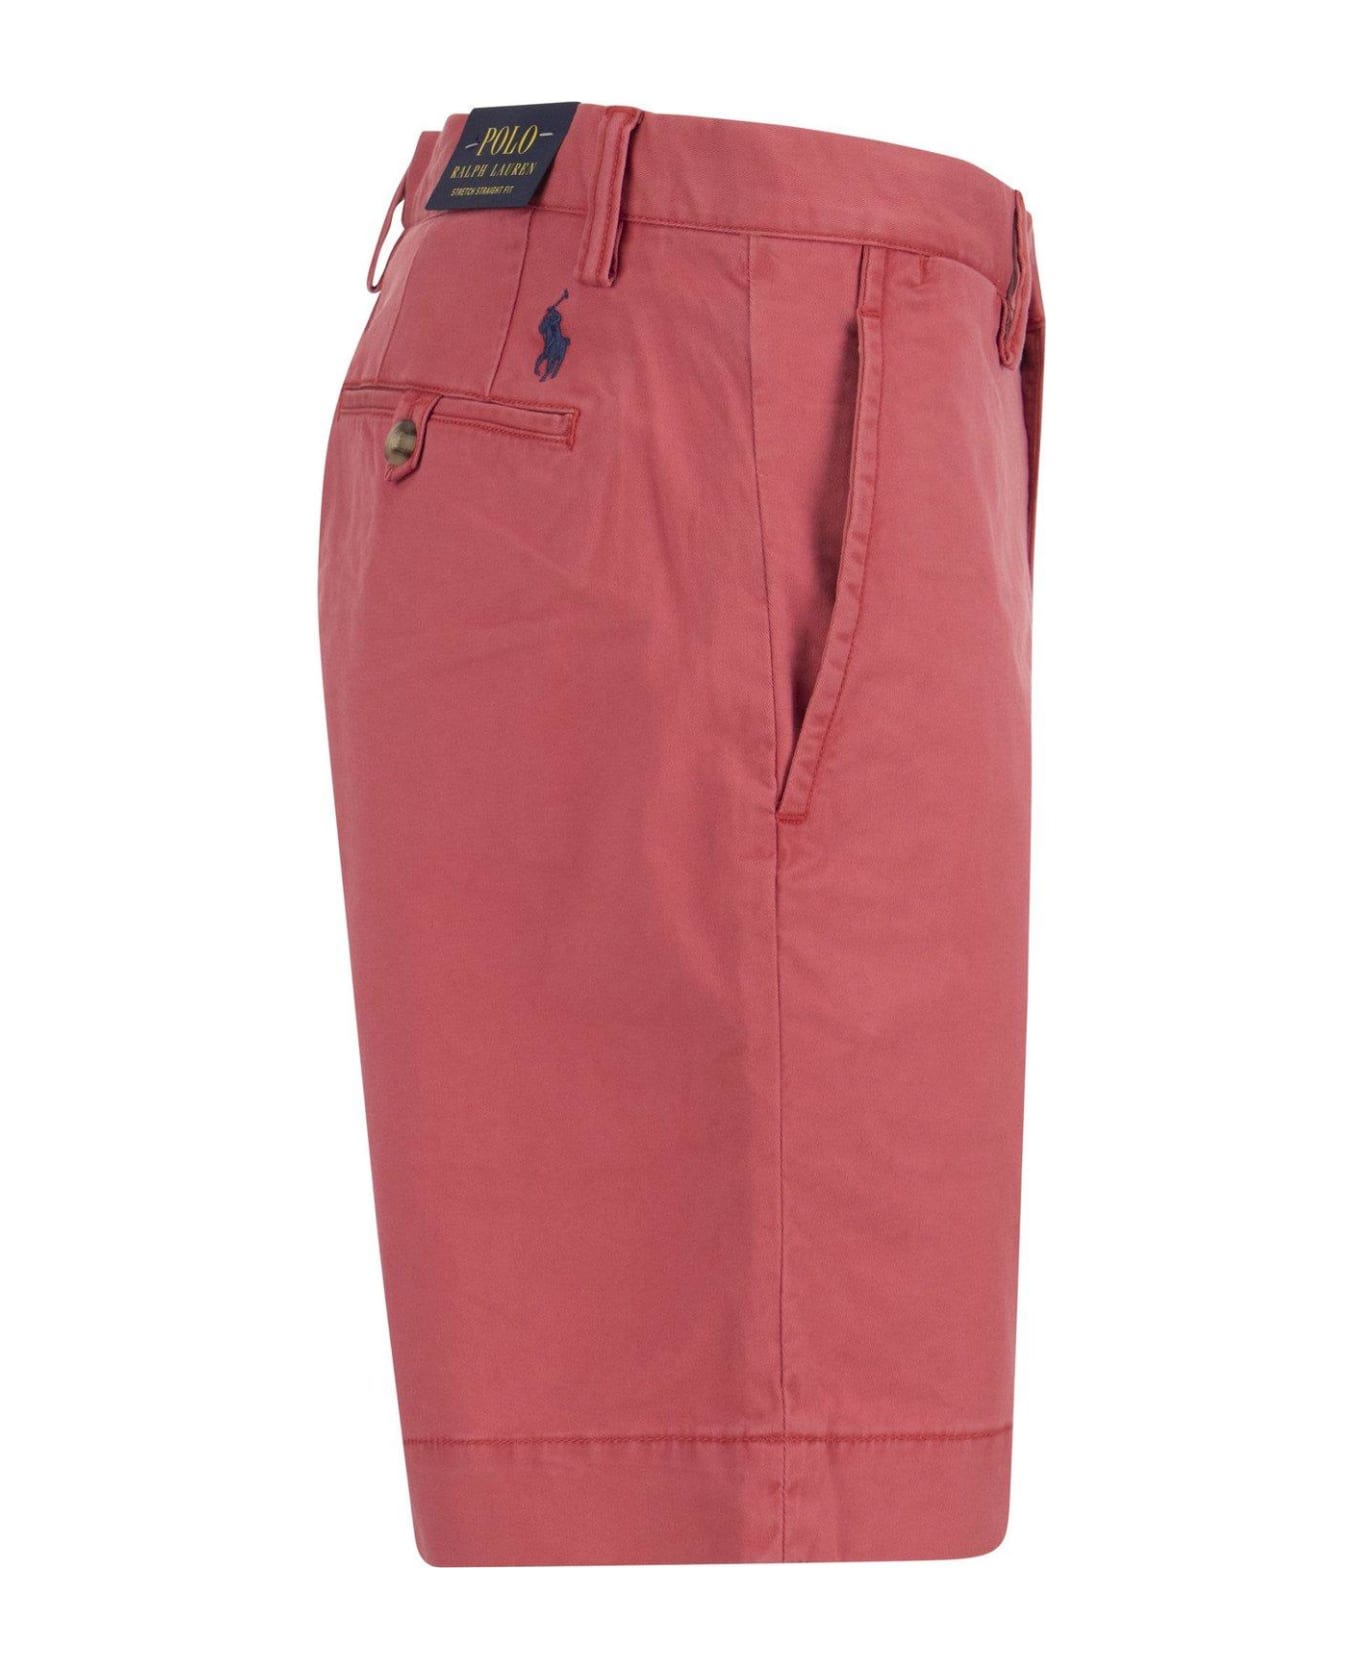 Ralph Lauren Knee-length Chino Shorts - Nantucket Red